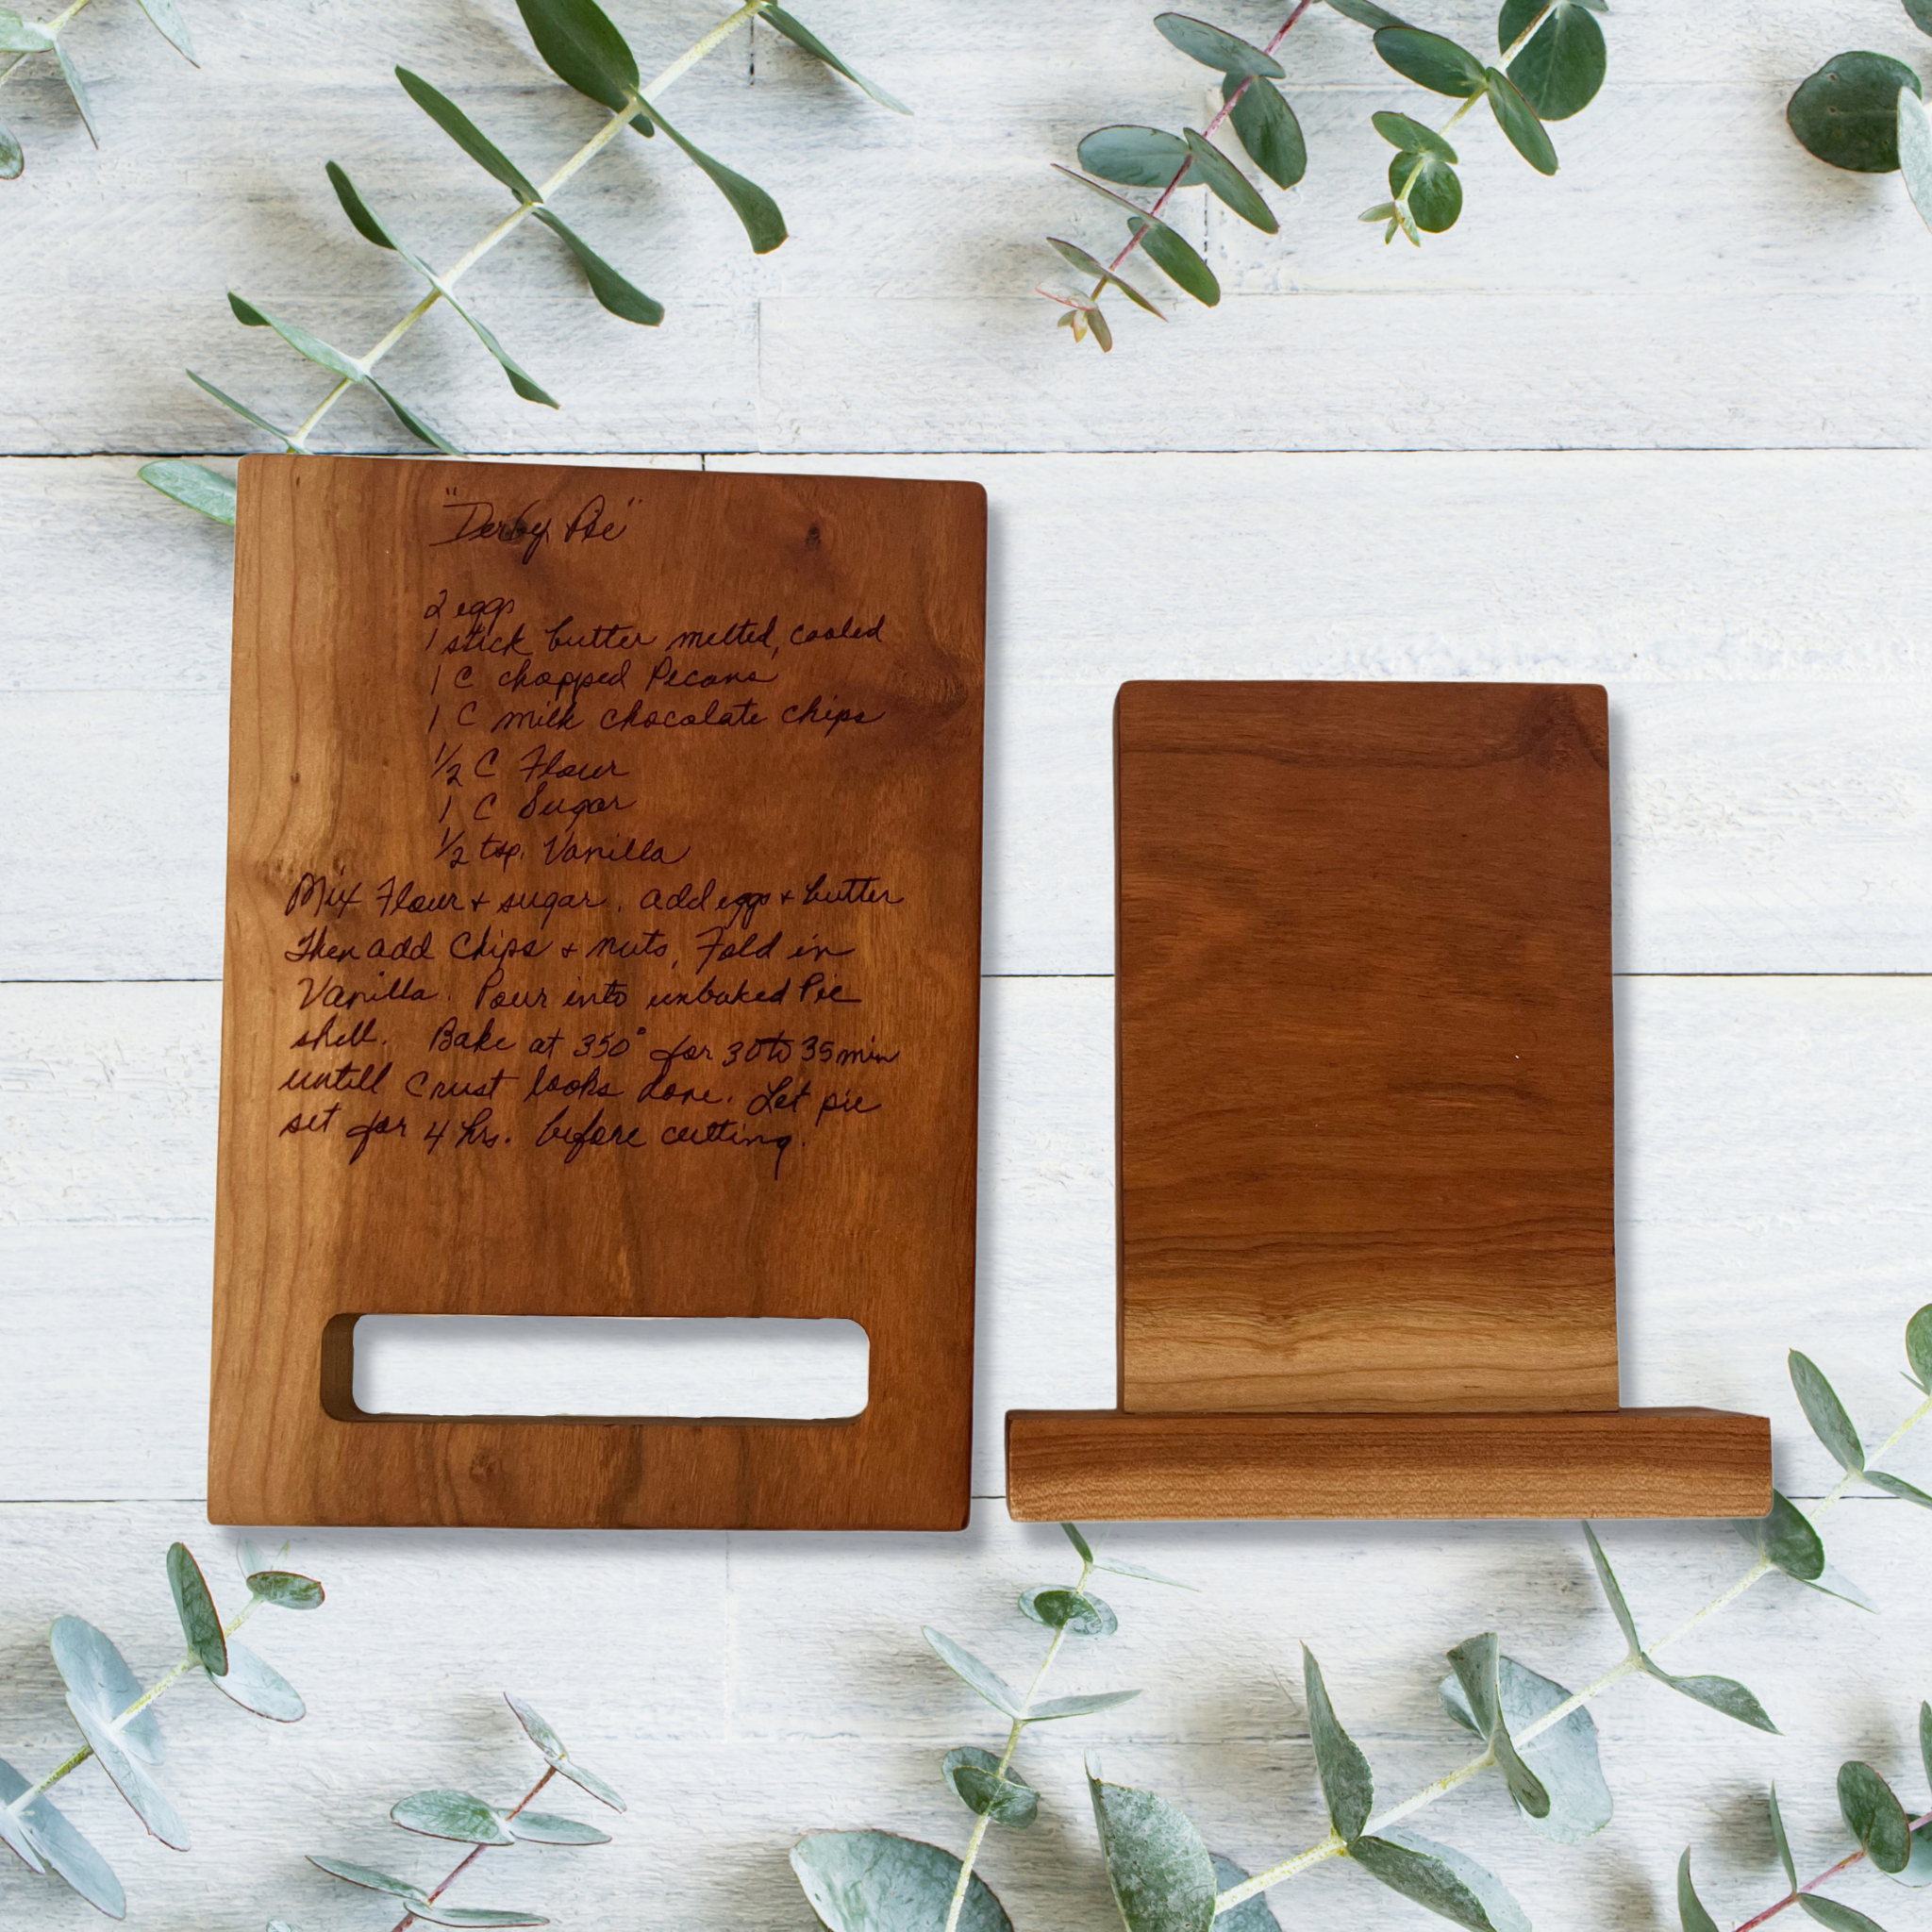 Cookbook detail, A scrapbook of cuttings and handwritten re…